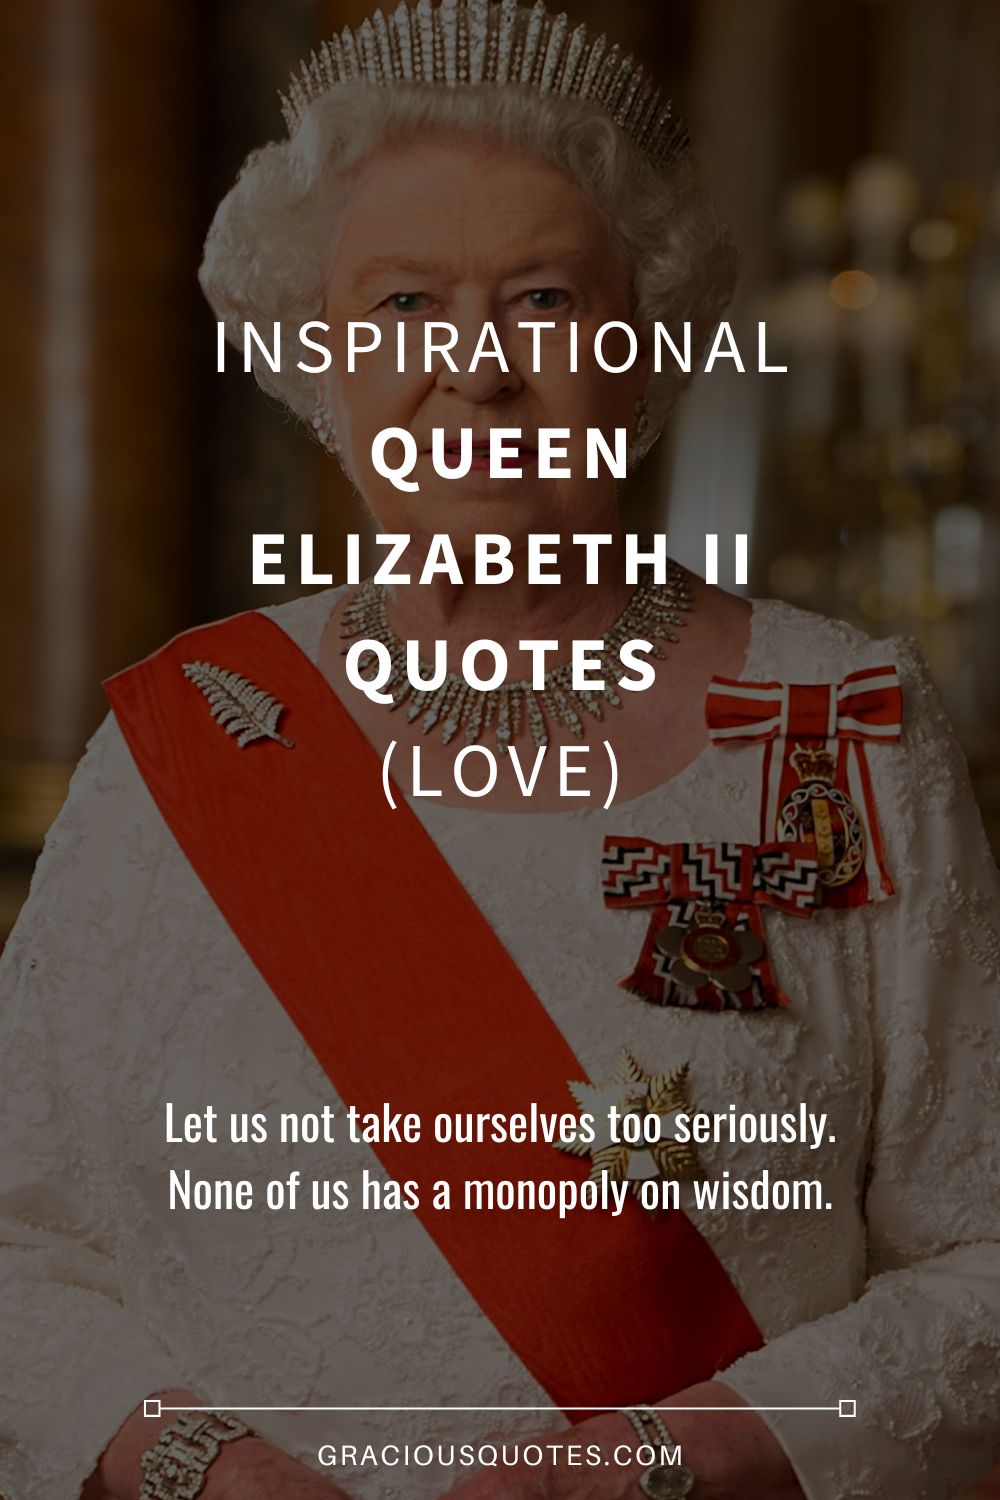 Inspirational Queen Elizabeth II Quotes (LOVE) - Gracious Quotes